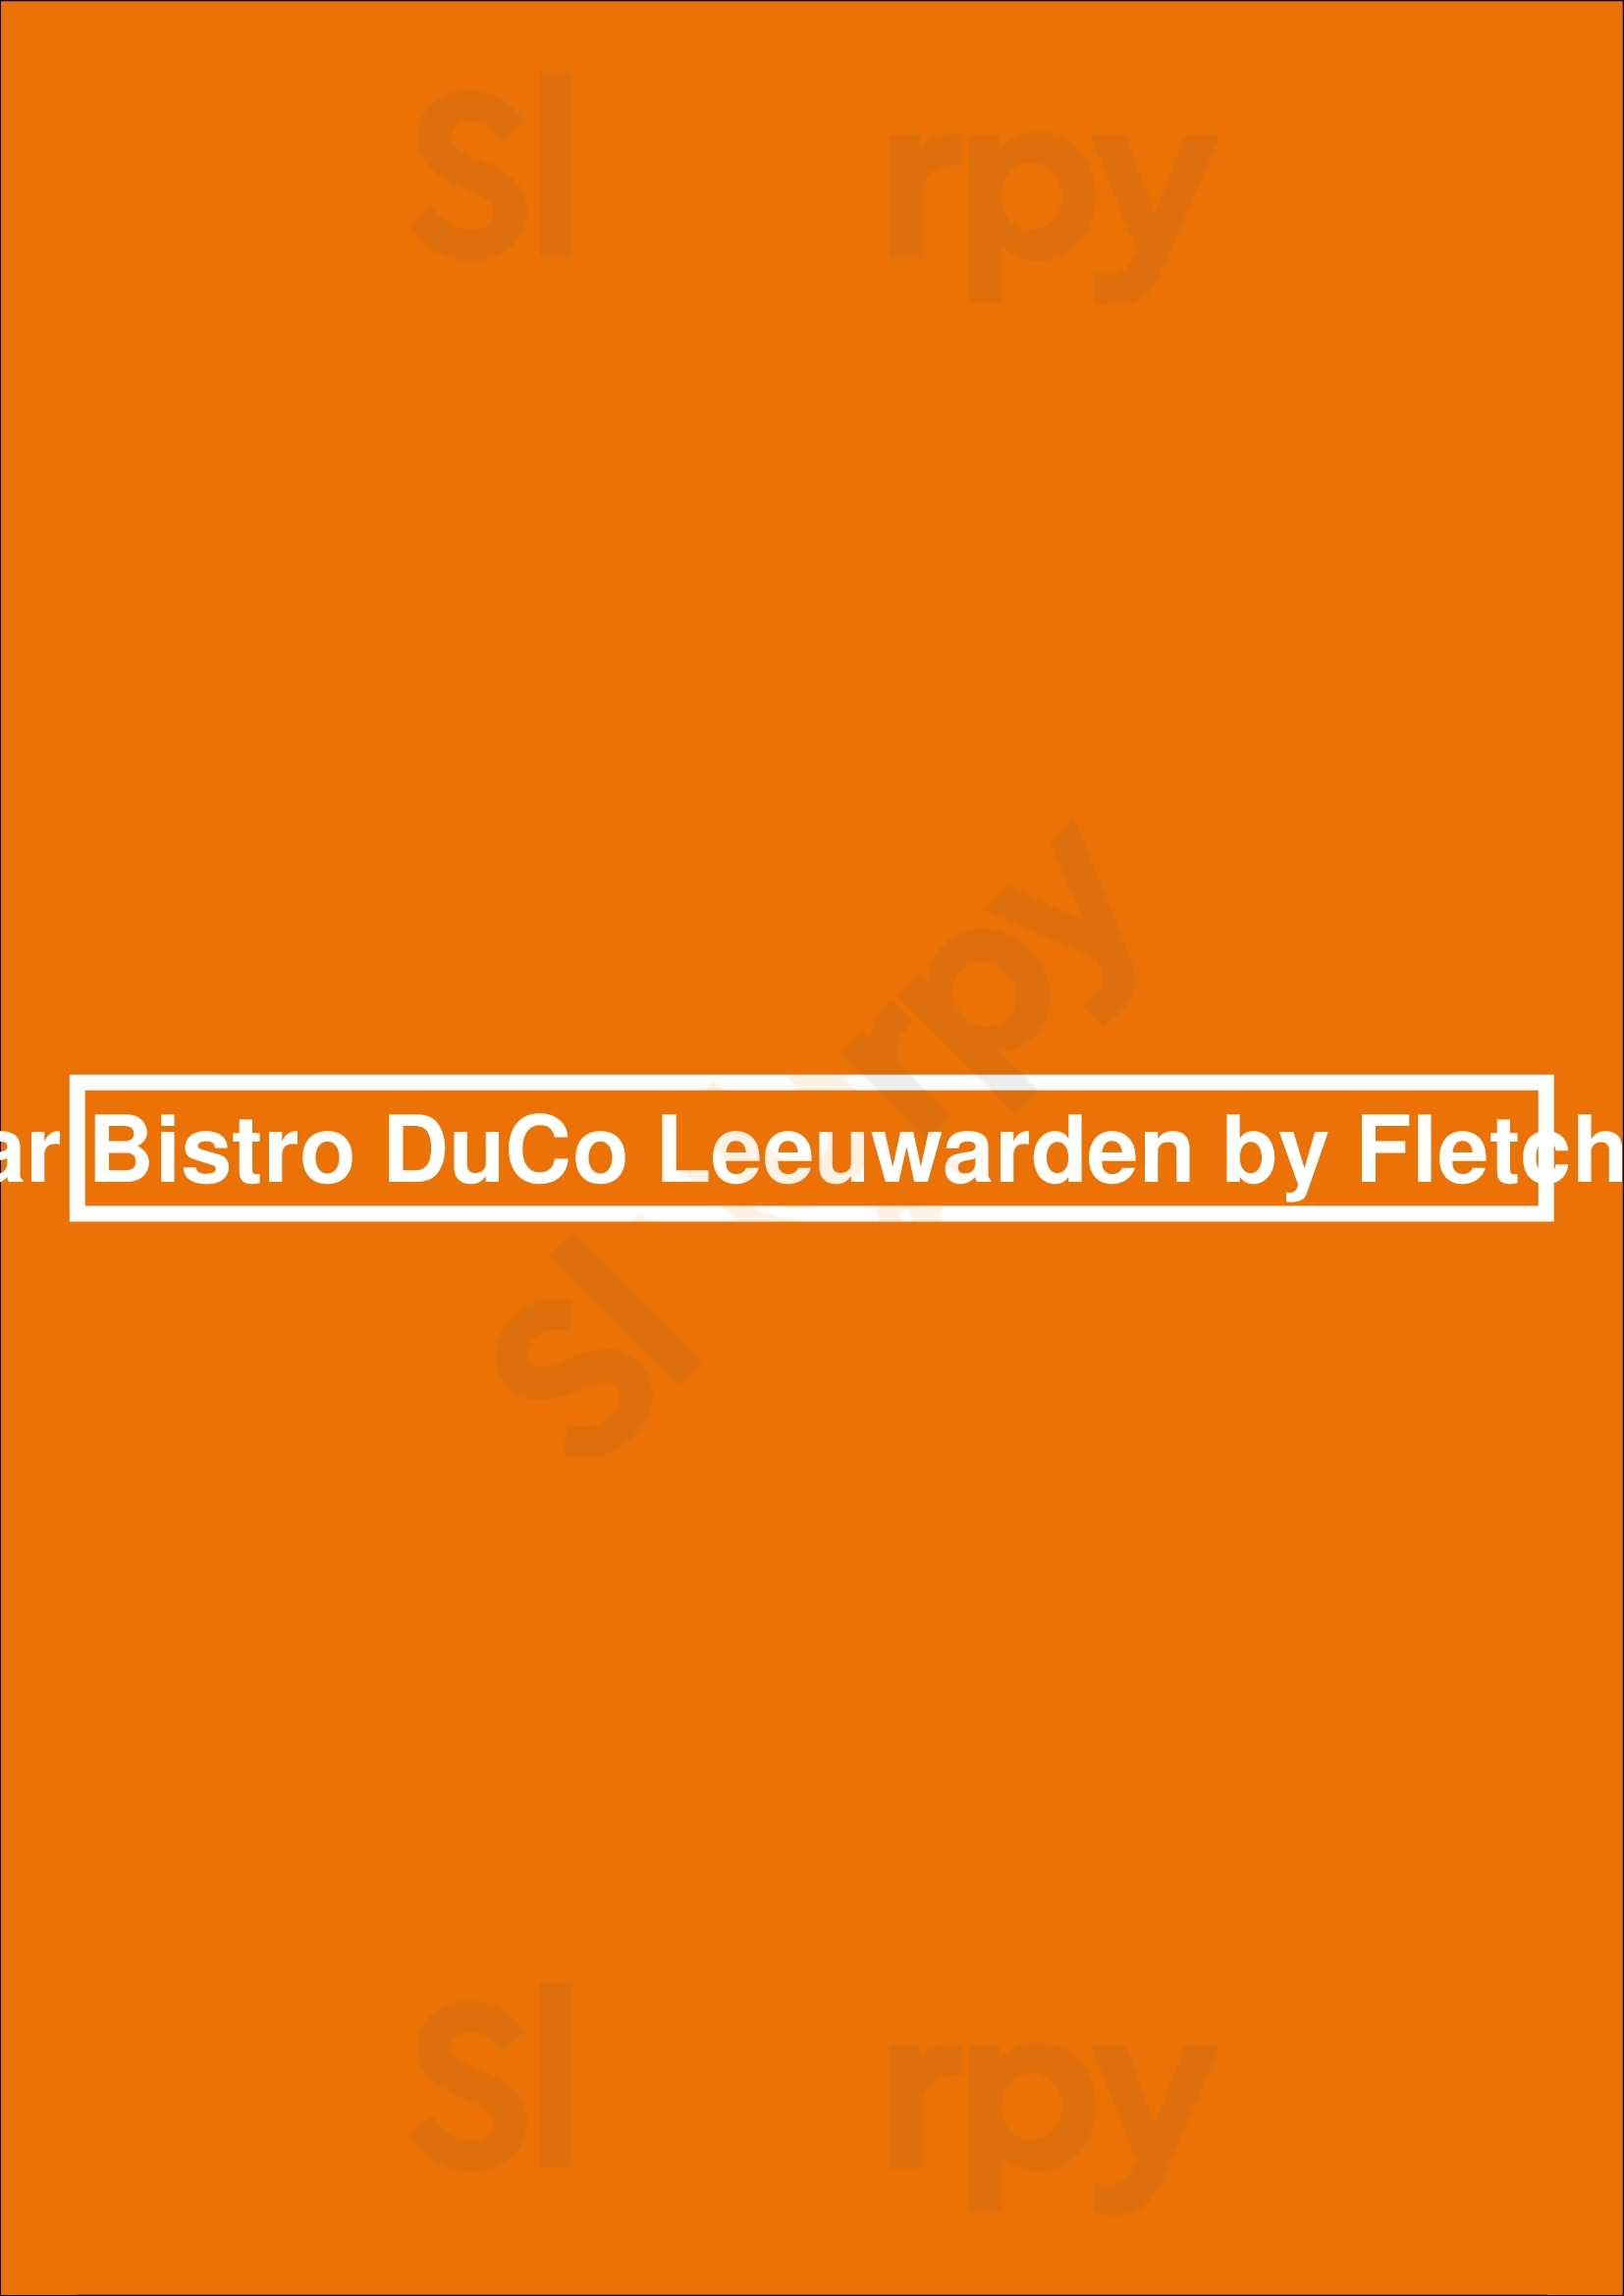 Bar Bistro Duco Leeuwarden By Fletcher Leeuwarden Menu - 1